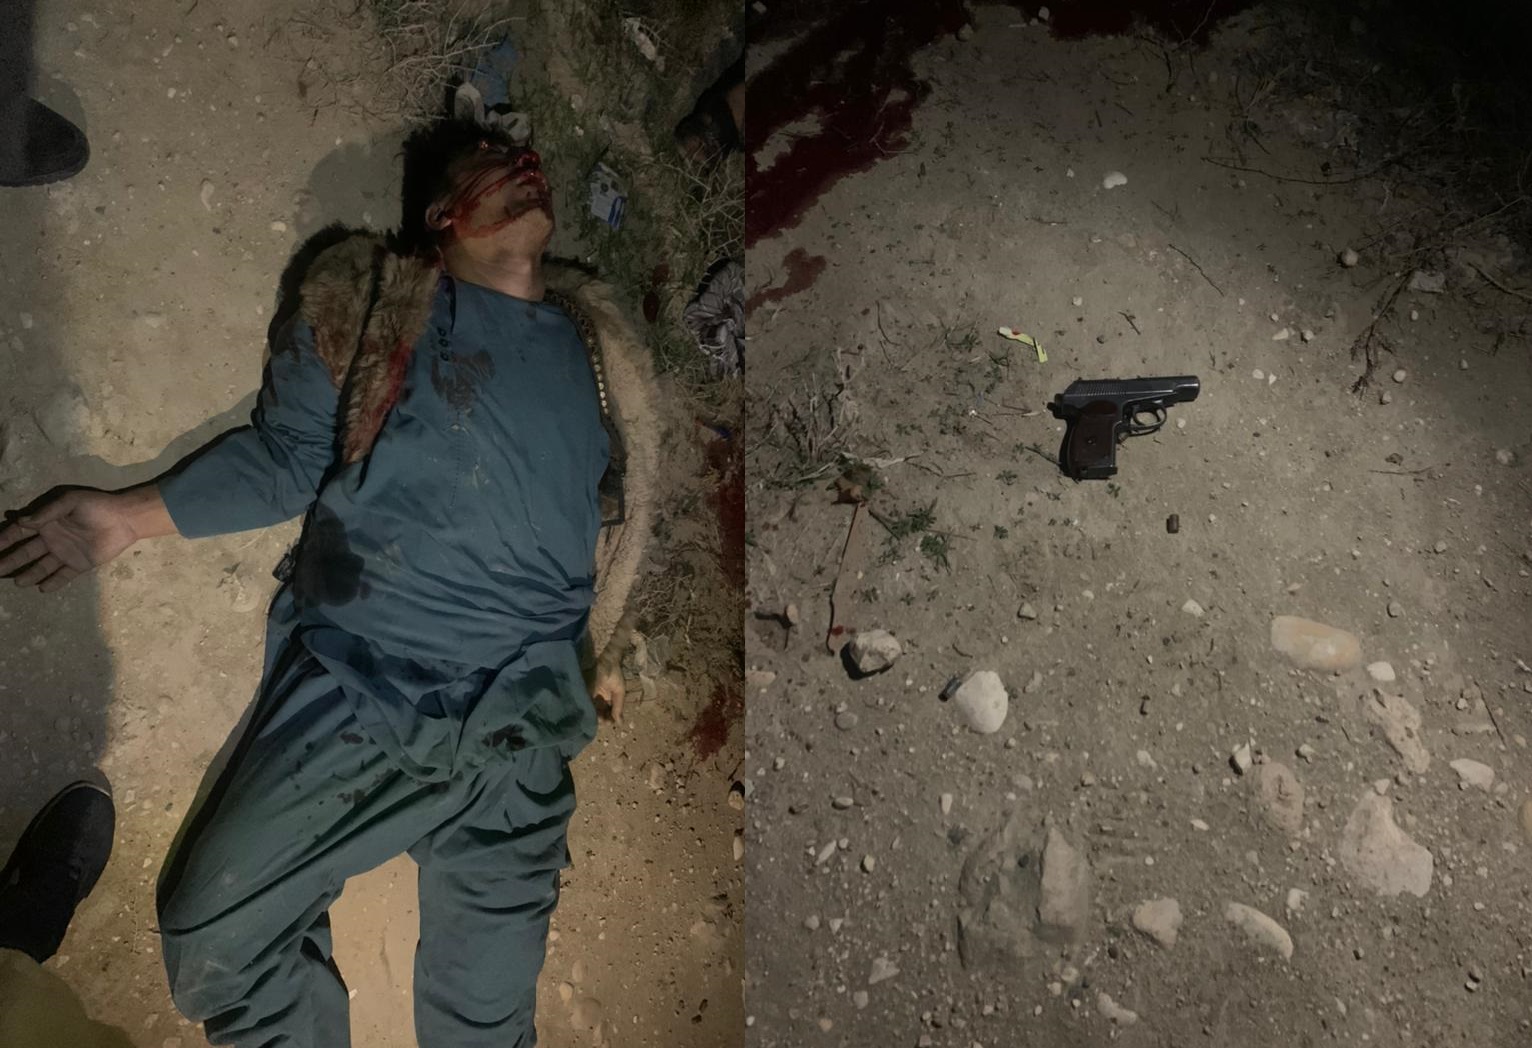 Security forces kill alleged murderer in Mazar Sharif